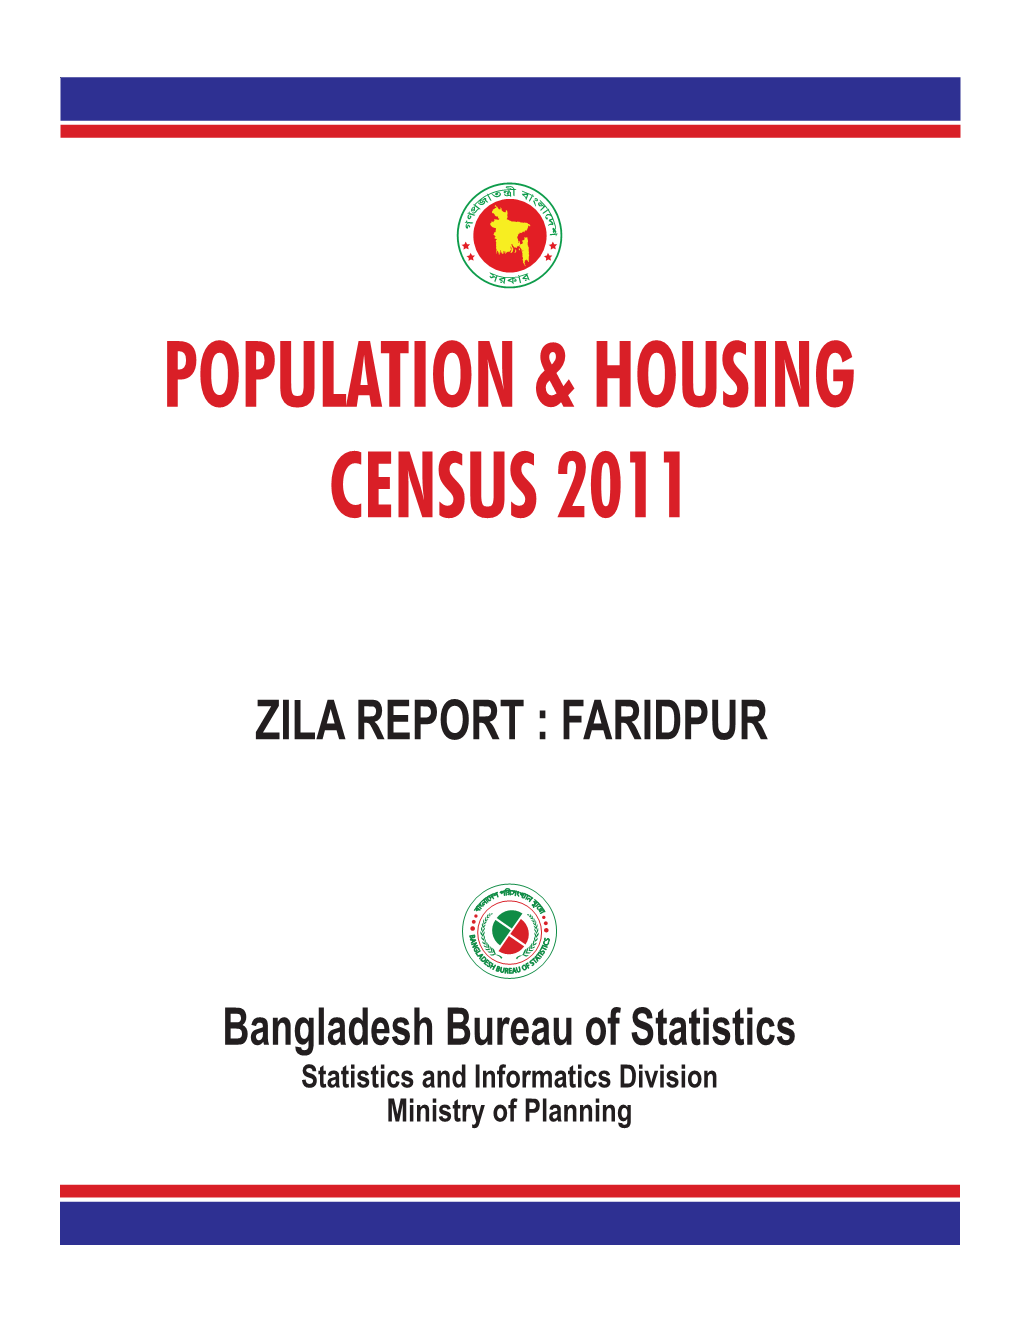 Bangladesh Population and Housing Census 2011 Zila